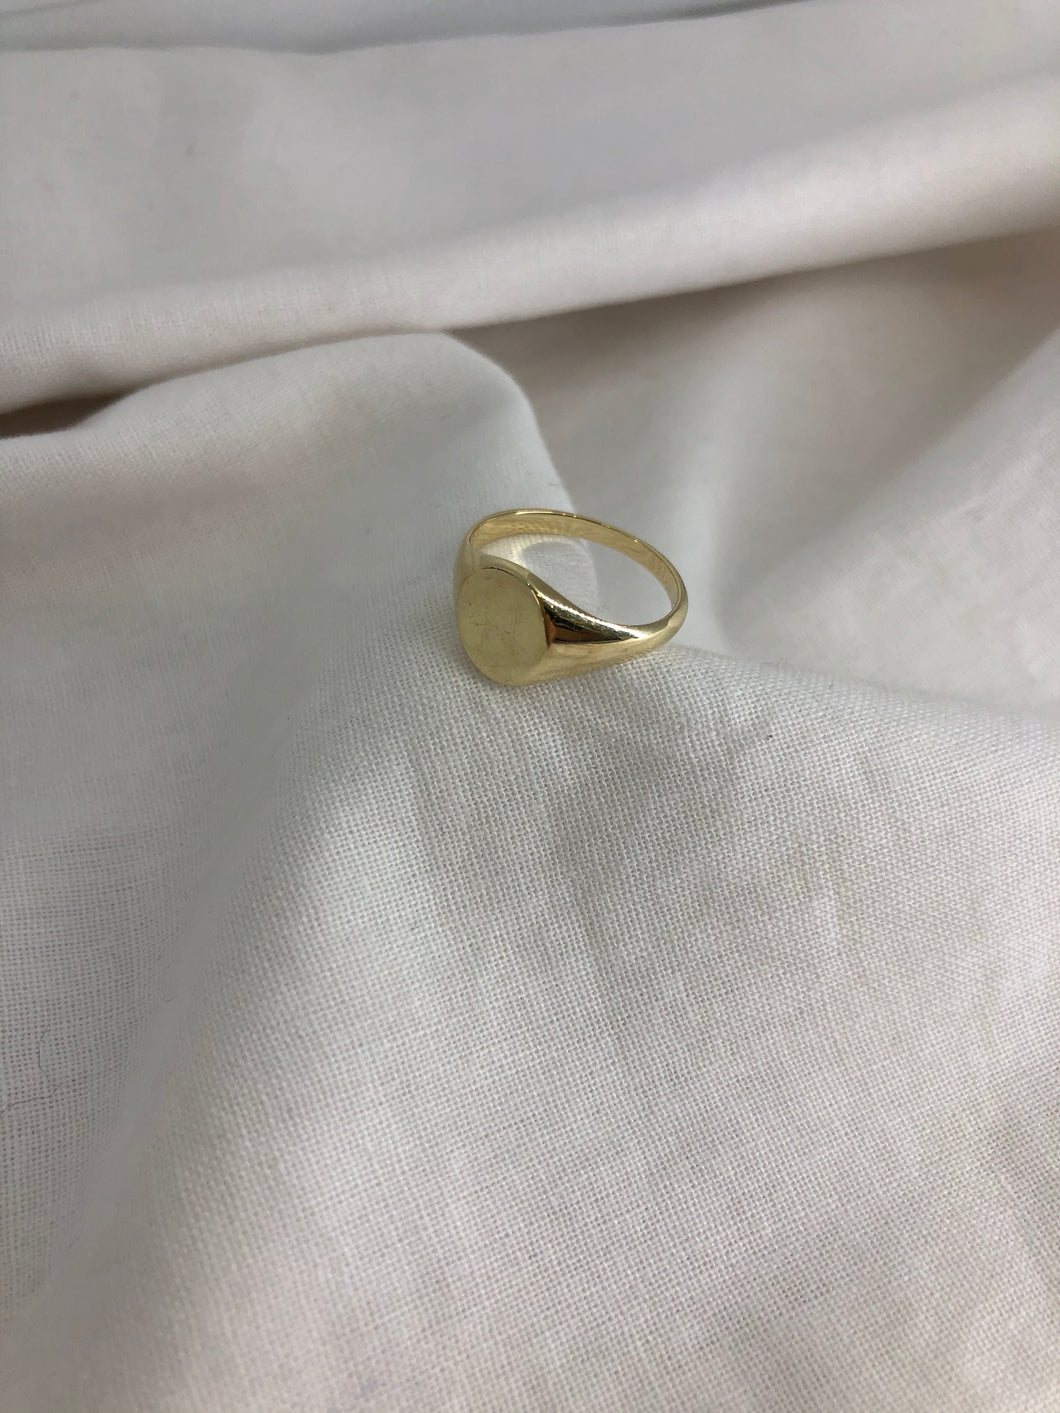 Gold Oval Signet Ring Medium style